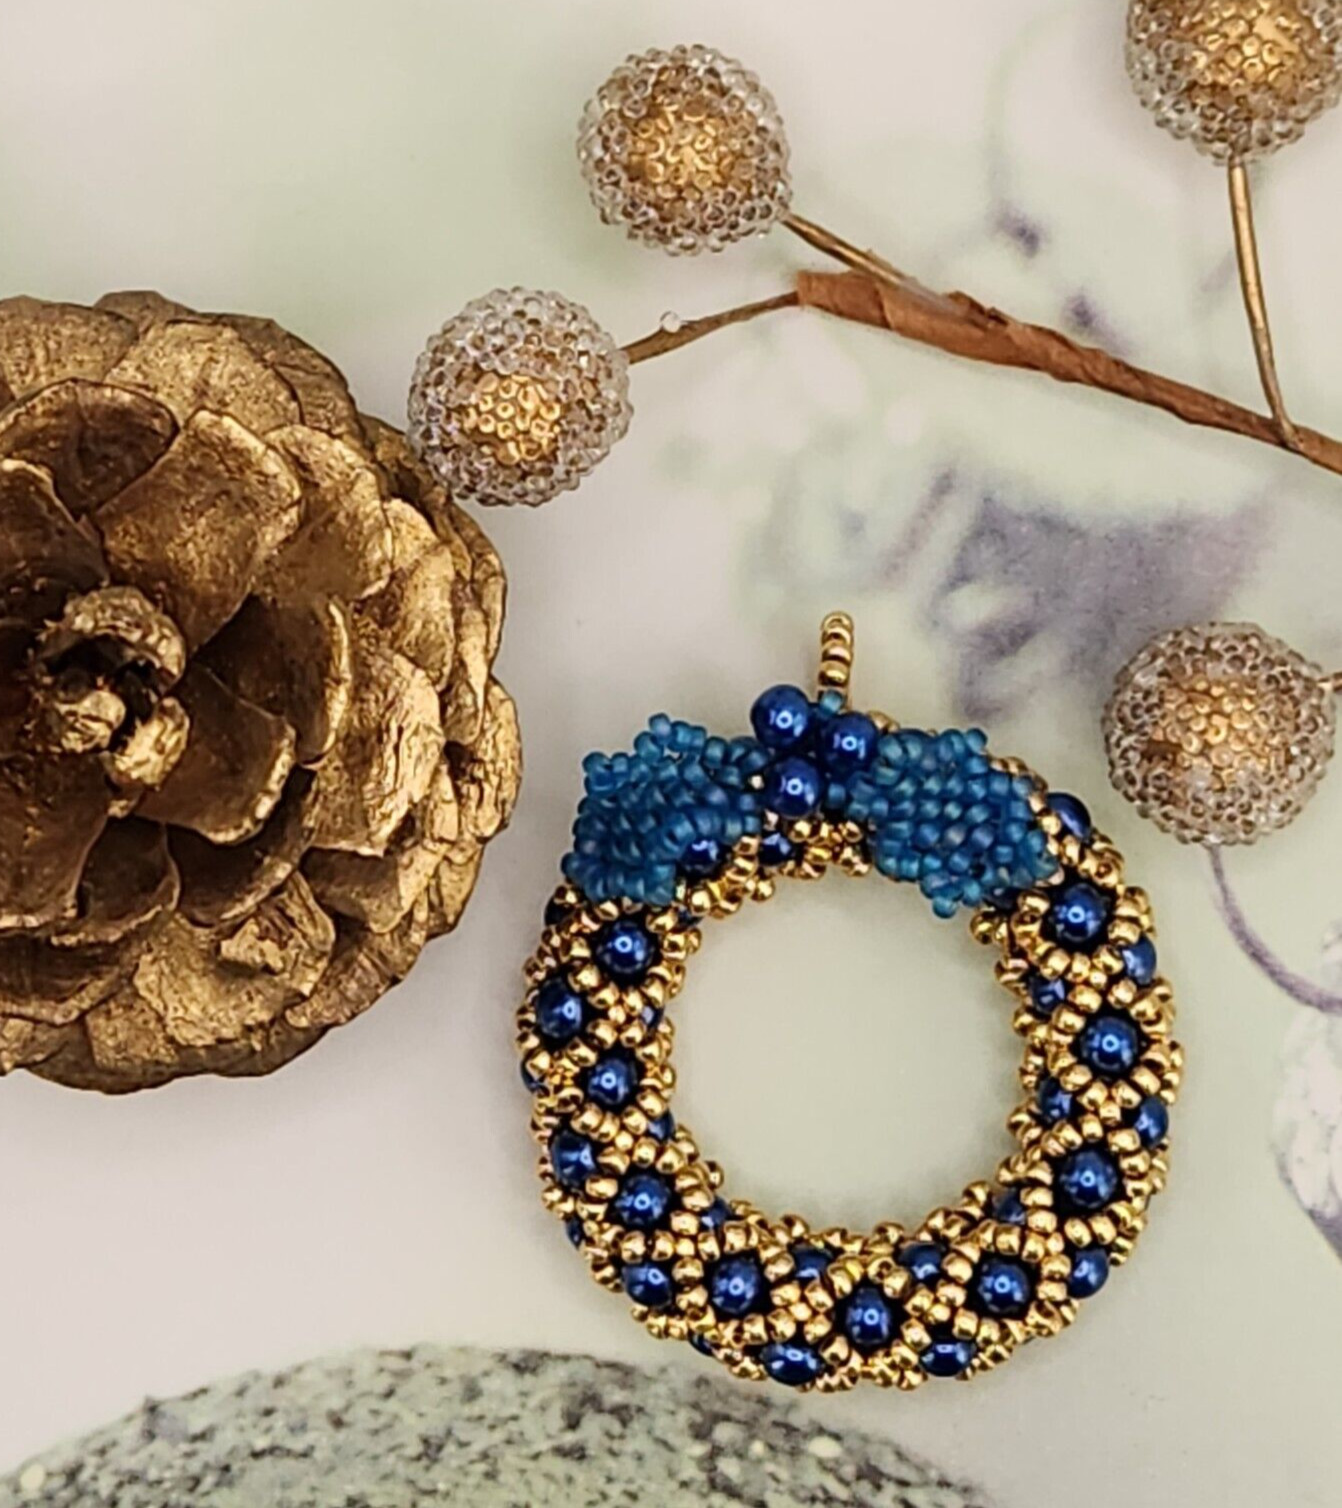 Mini Wreath 3D Christmas Ornament Handmade Beaded Blue and Gold